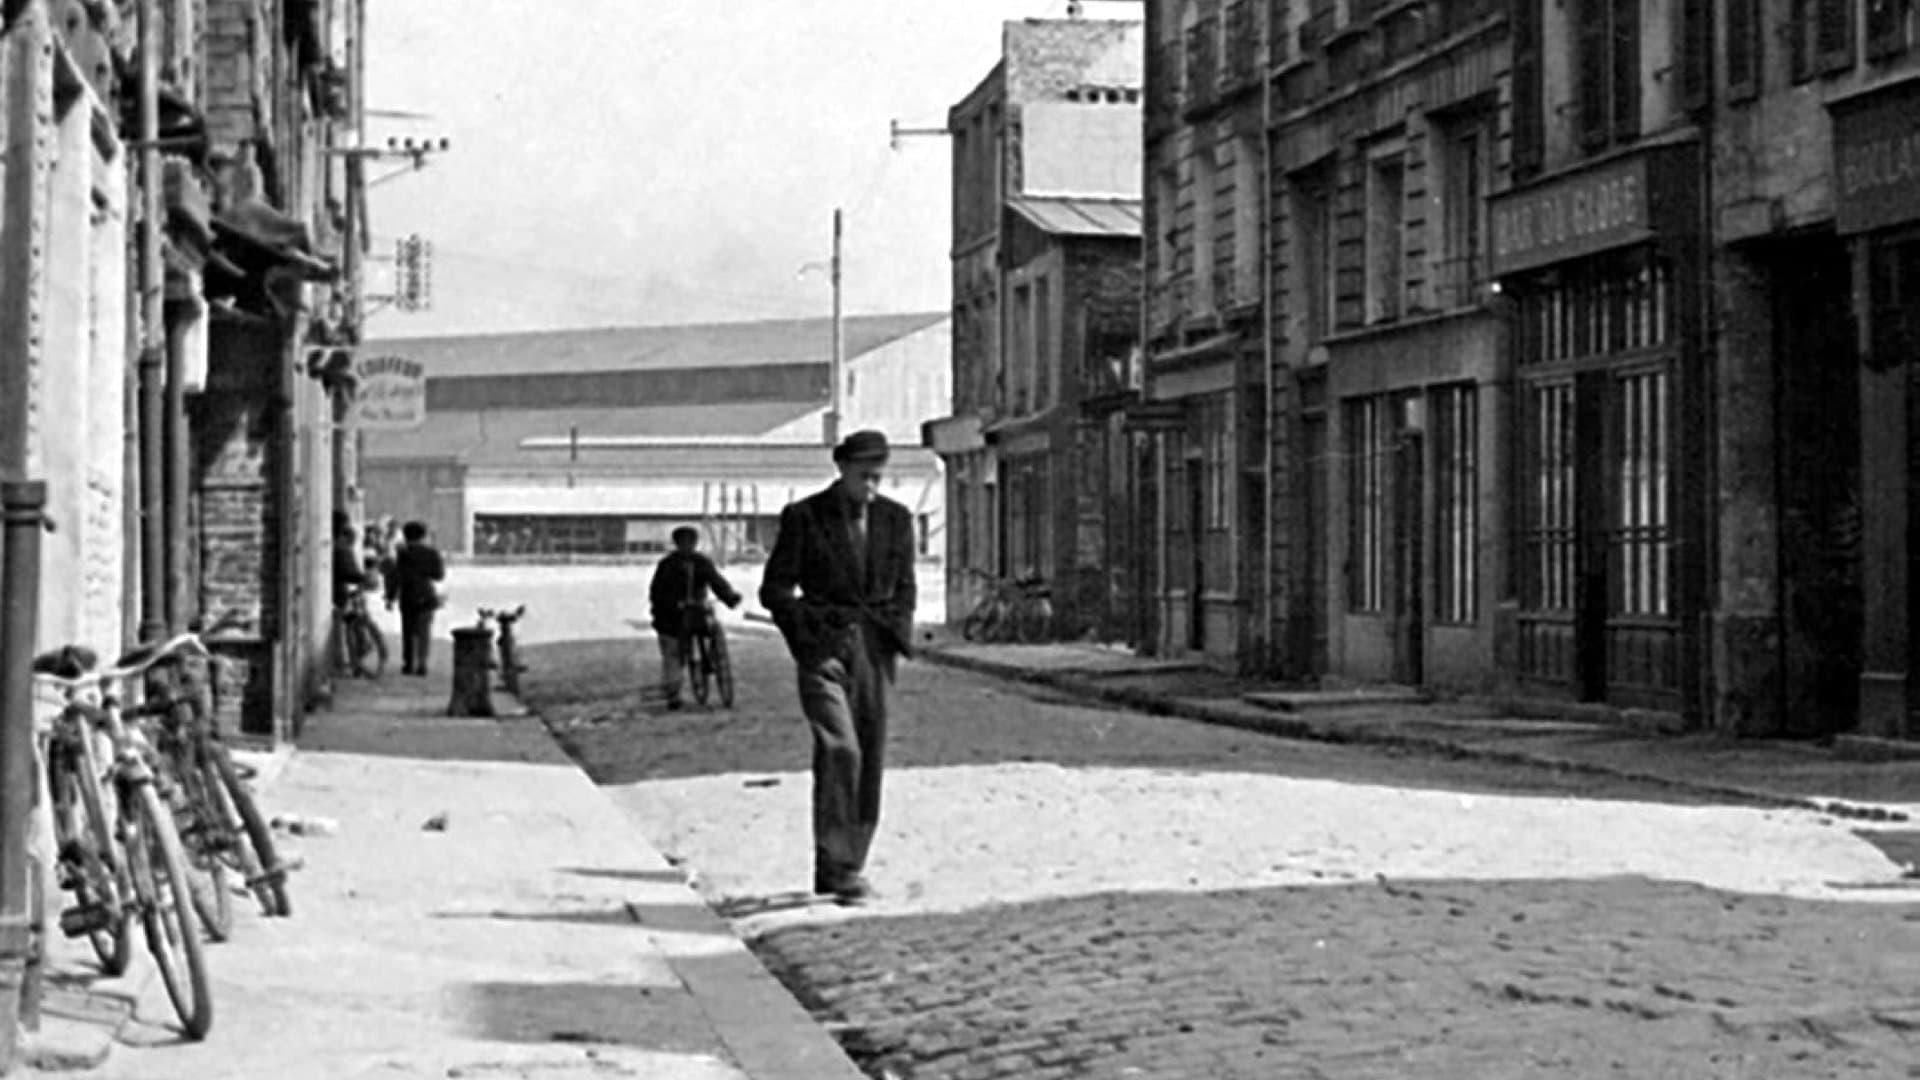 A Man Walks in the City backdrop